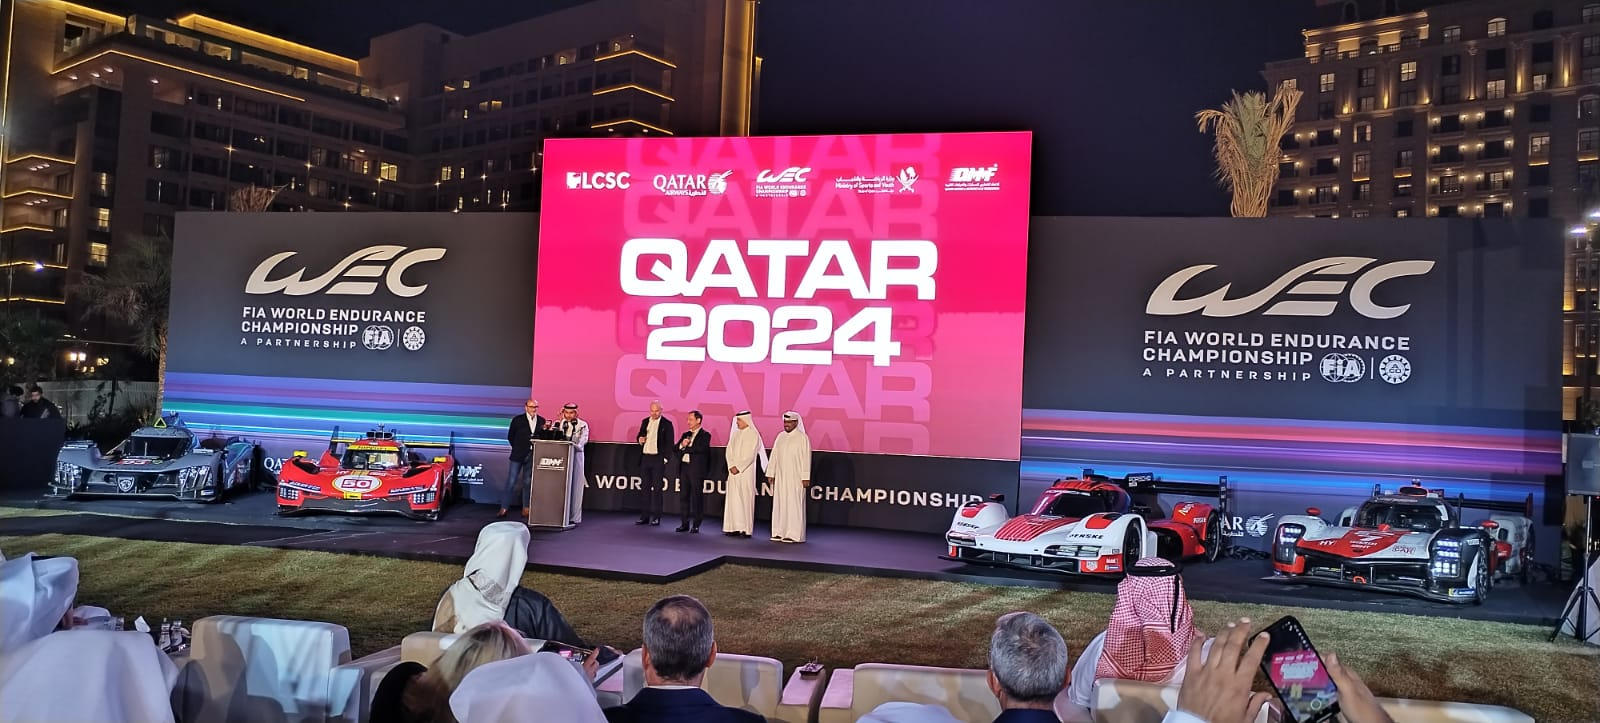 Qatar to Host FIA World Endurance Championship 2024